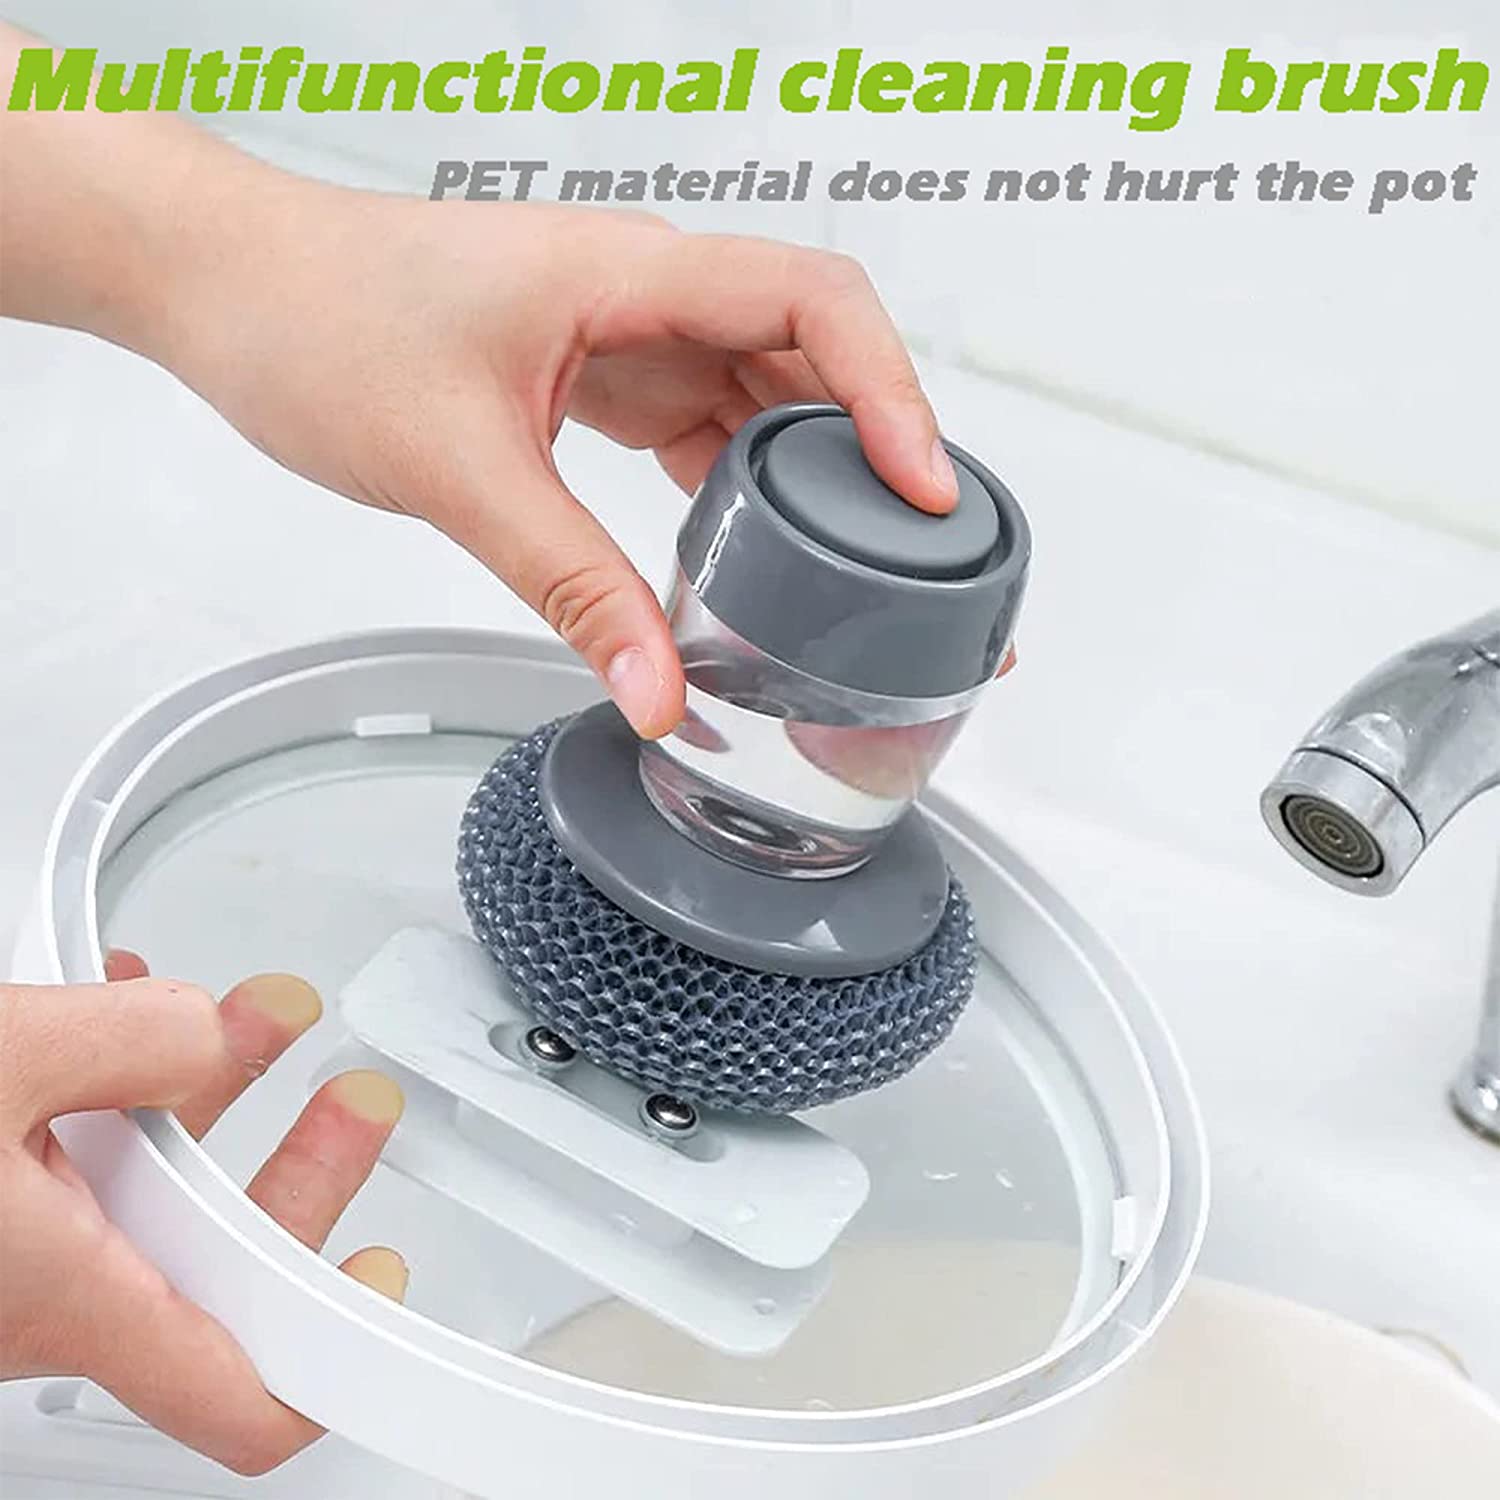 Brush, Cleaning Brush, Dish Brush With Soap Dispenser, Dish